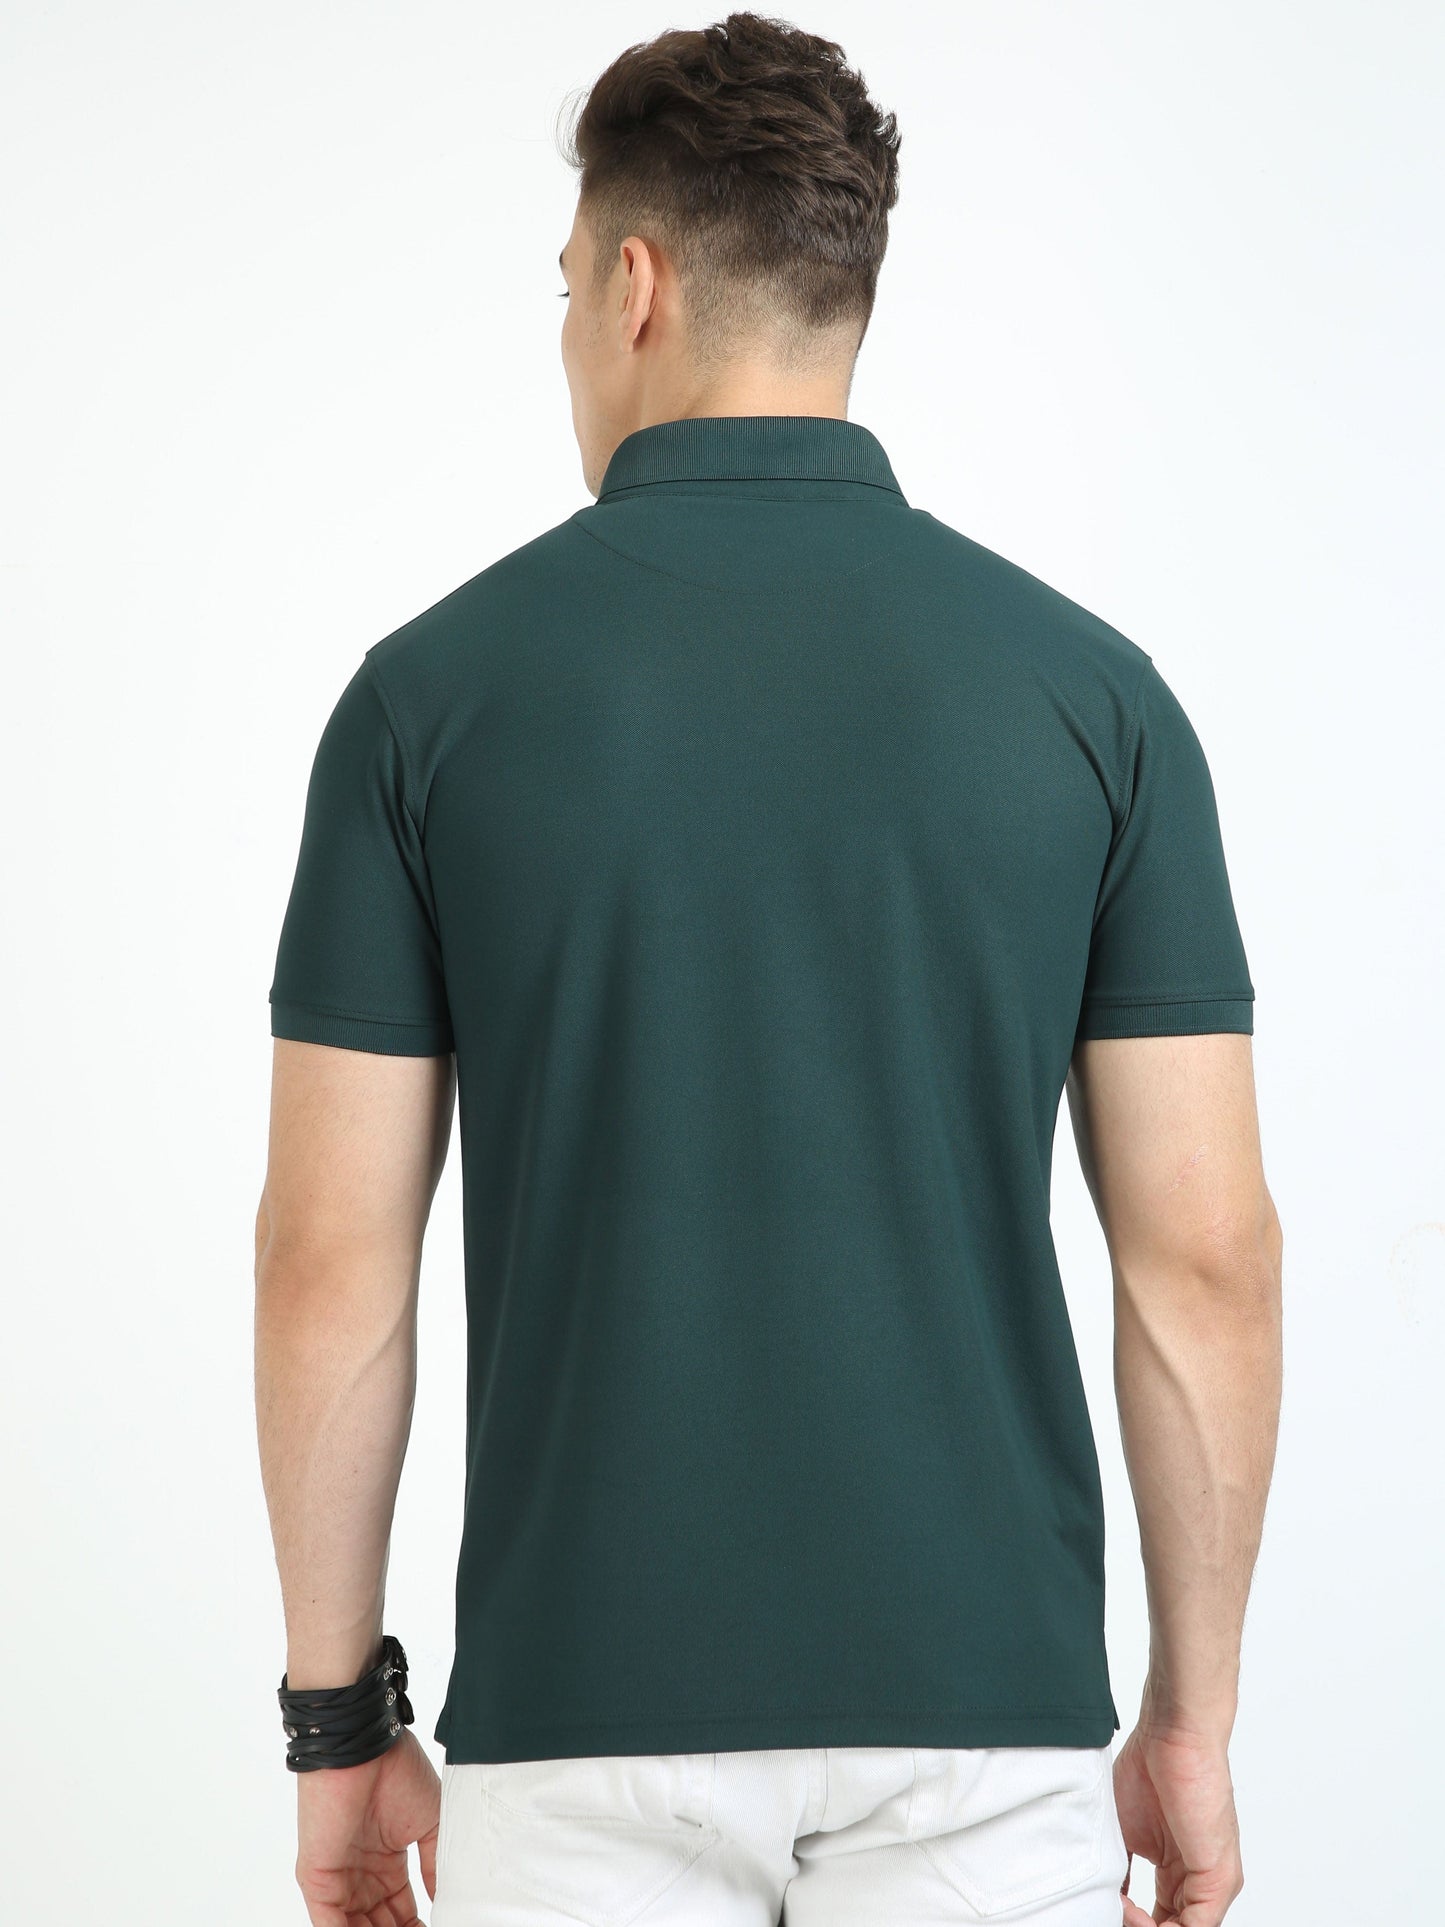 Pine Green Men's Polo T-shirt